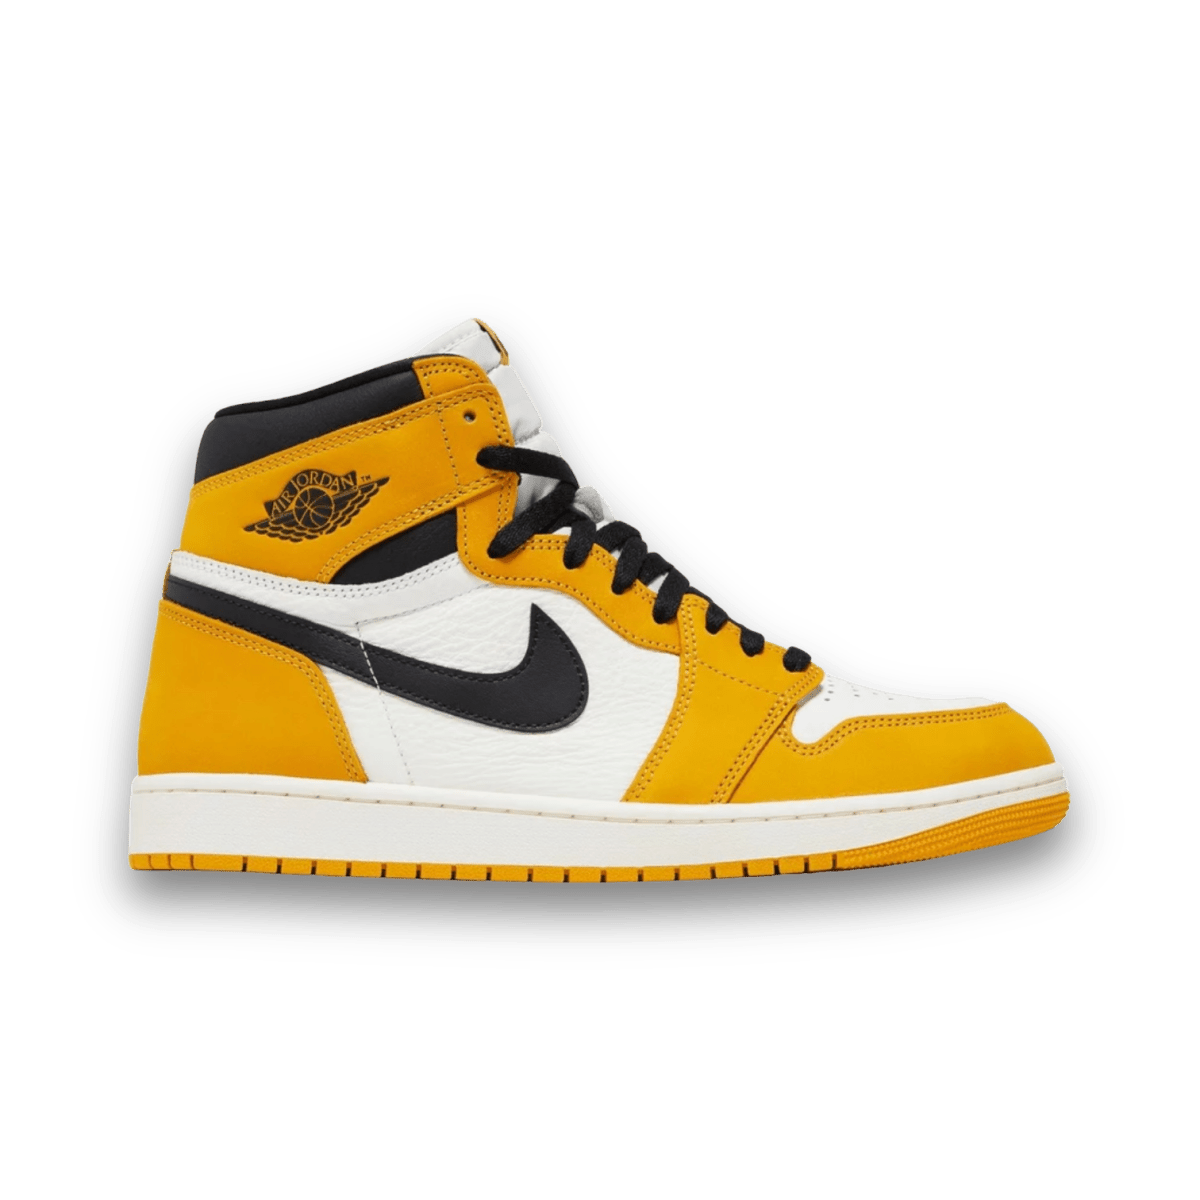 Air Jordan 1 Retro High OG 'Yellow Ochre' - High Sneaker - Jordan - Jawns on Fire - sneakers